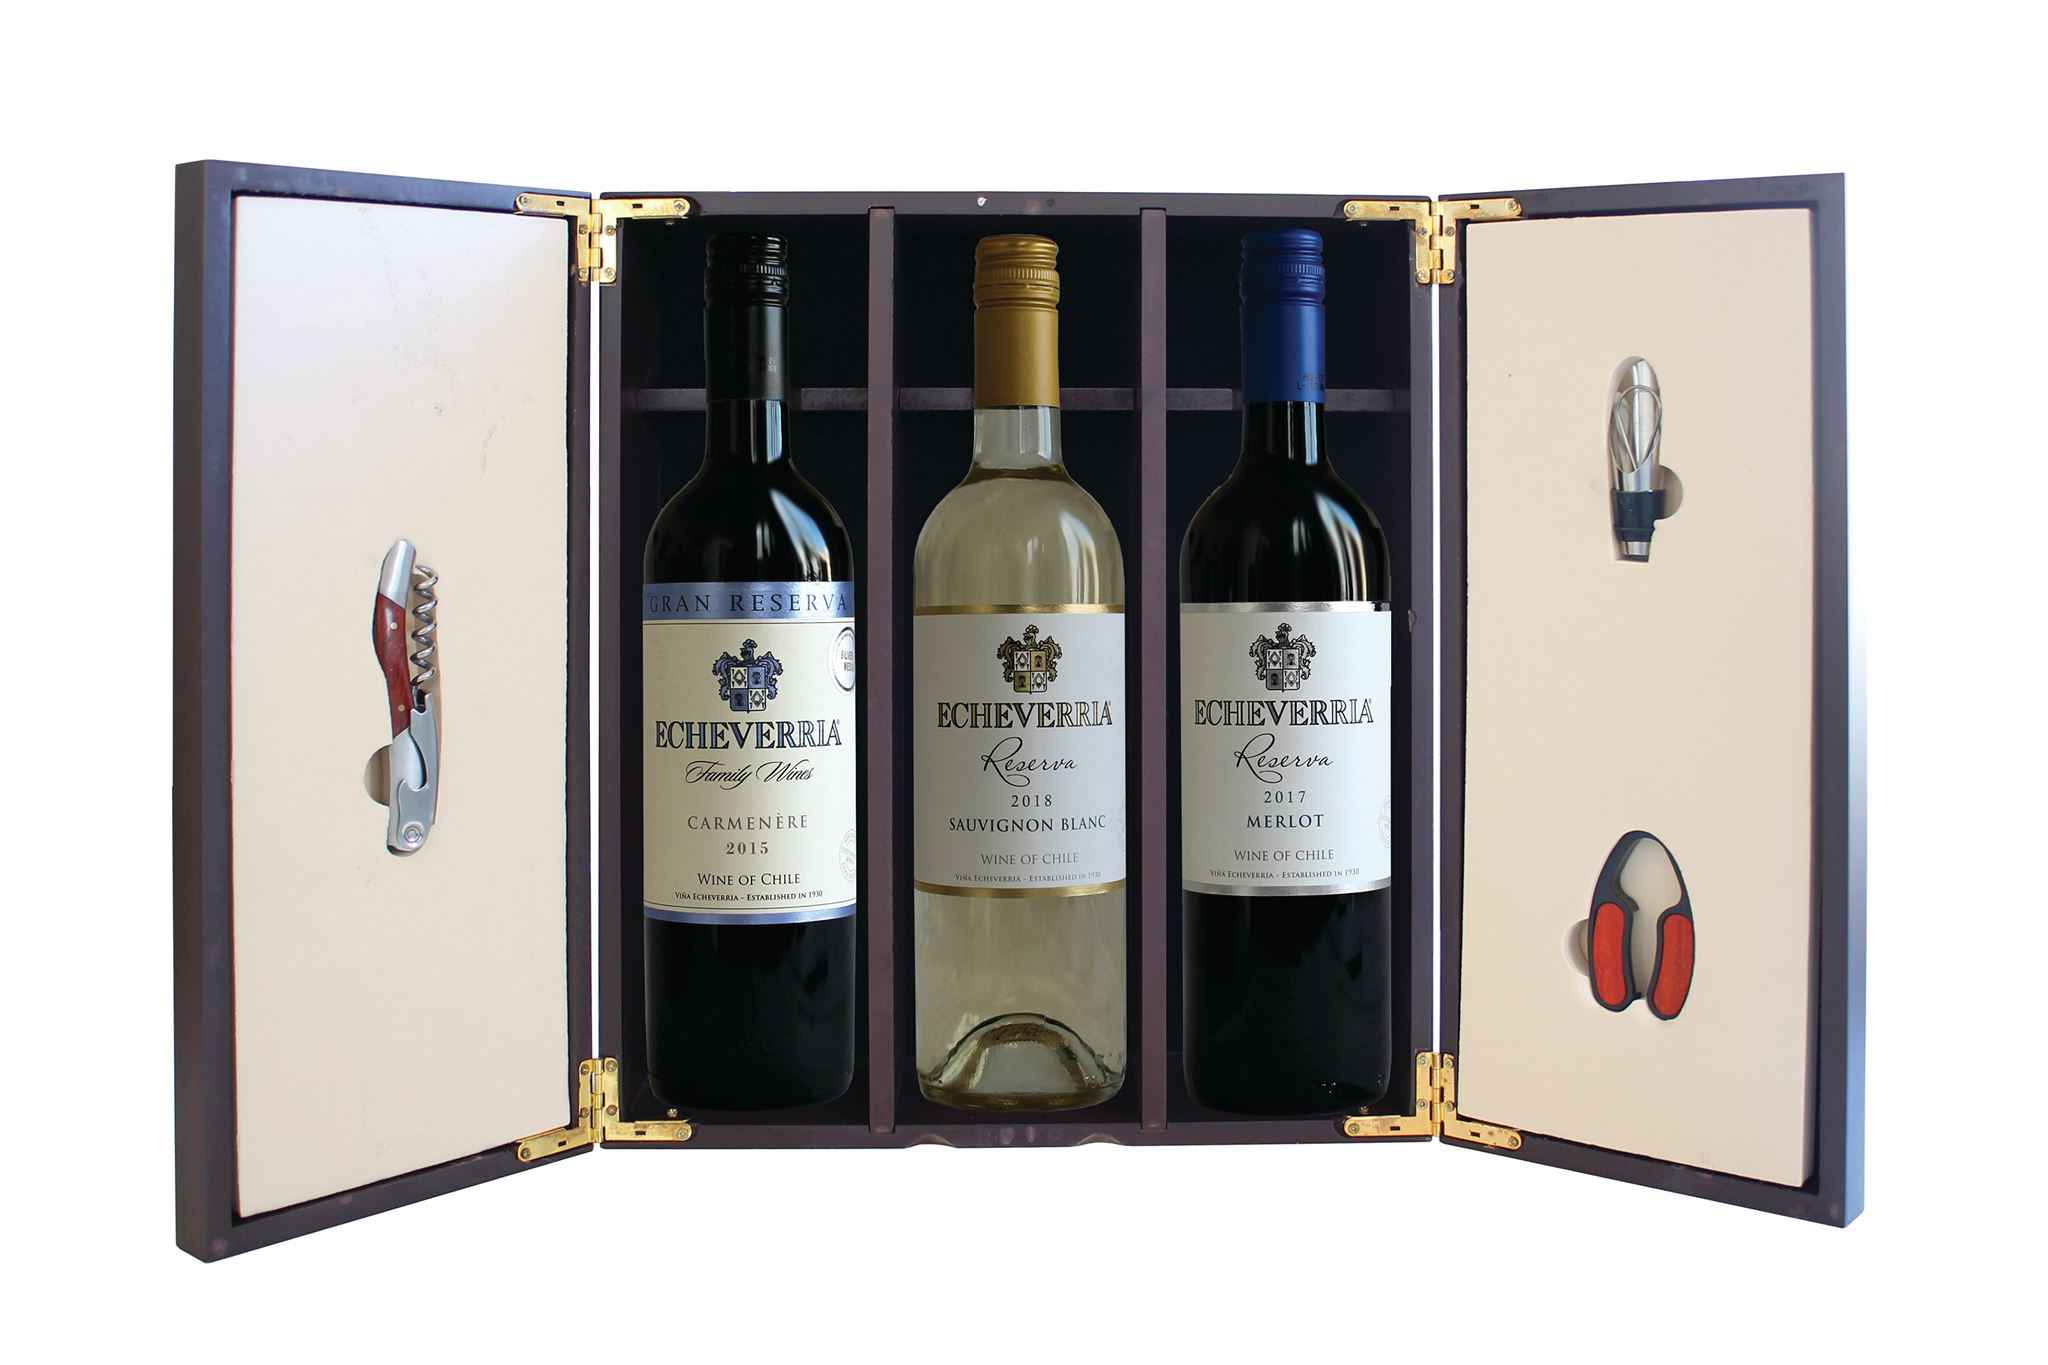 Antonio Piscopo Wines & Spirits - Wines & Spirits Retail